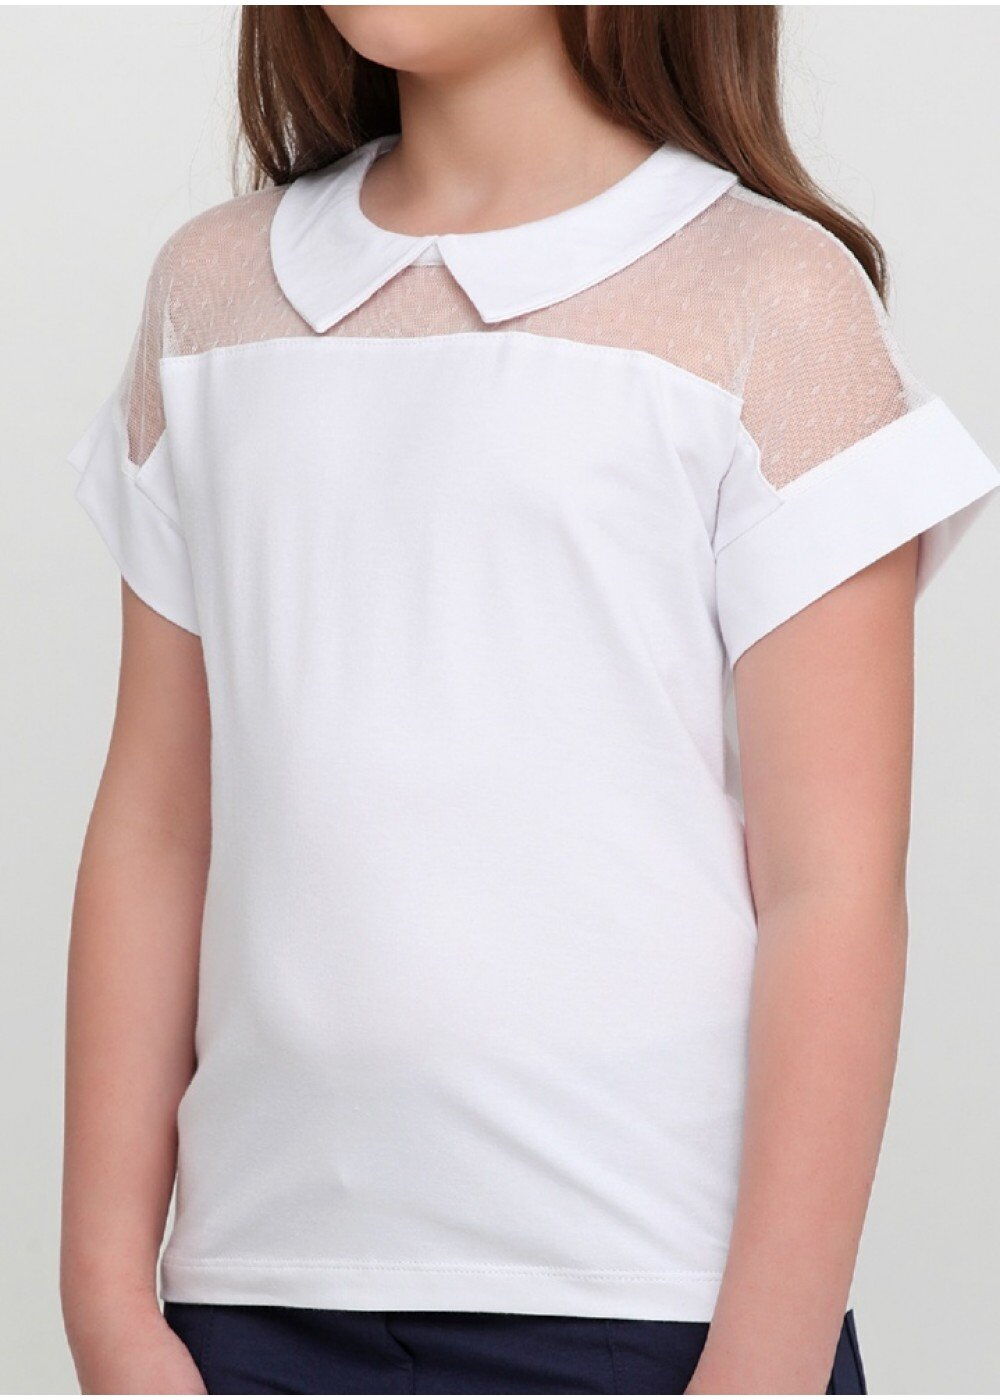 Трикотажная блузка для девочки Vidoli белая 19596 - фото